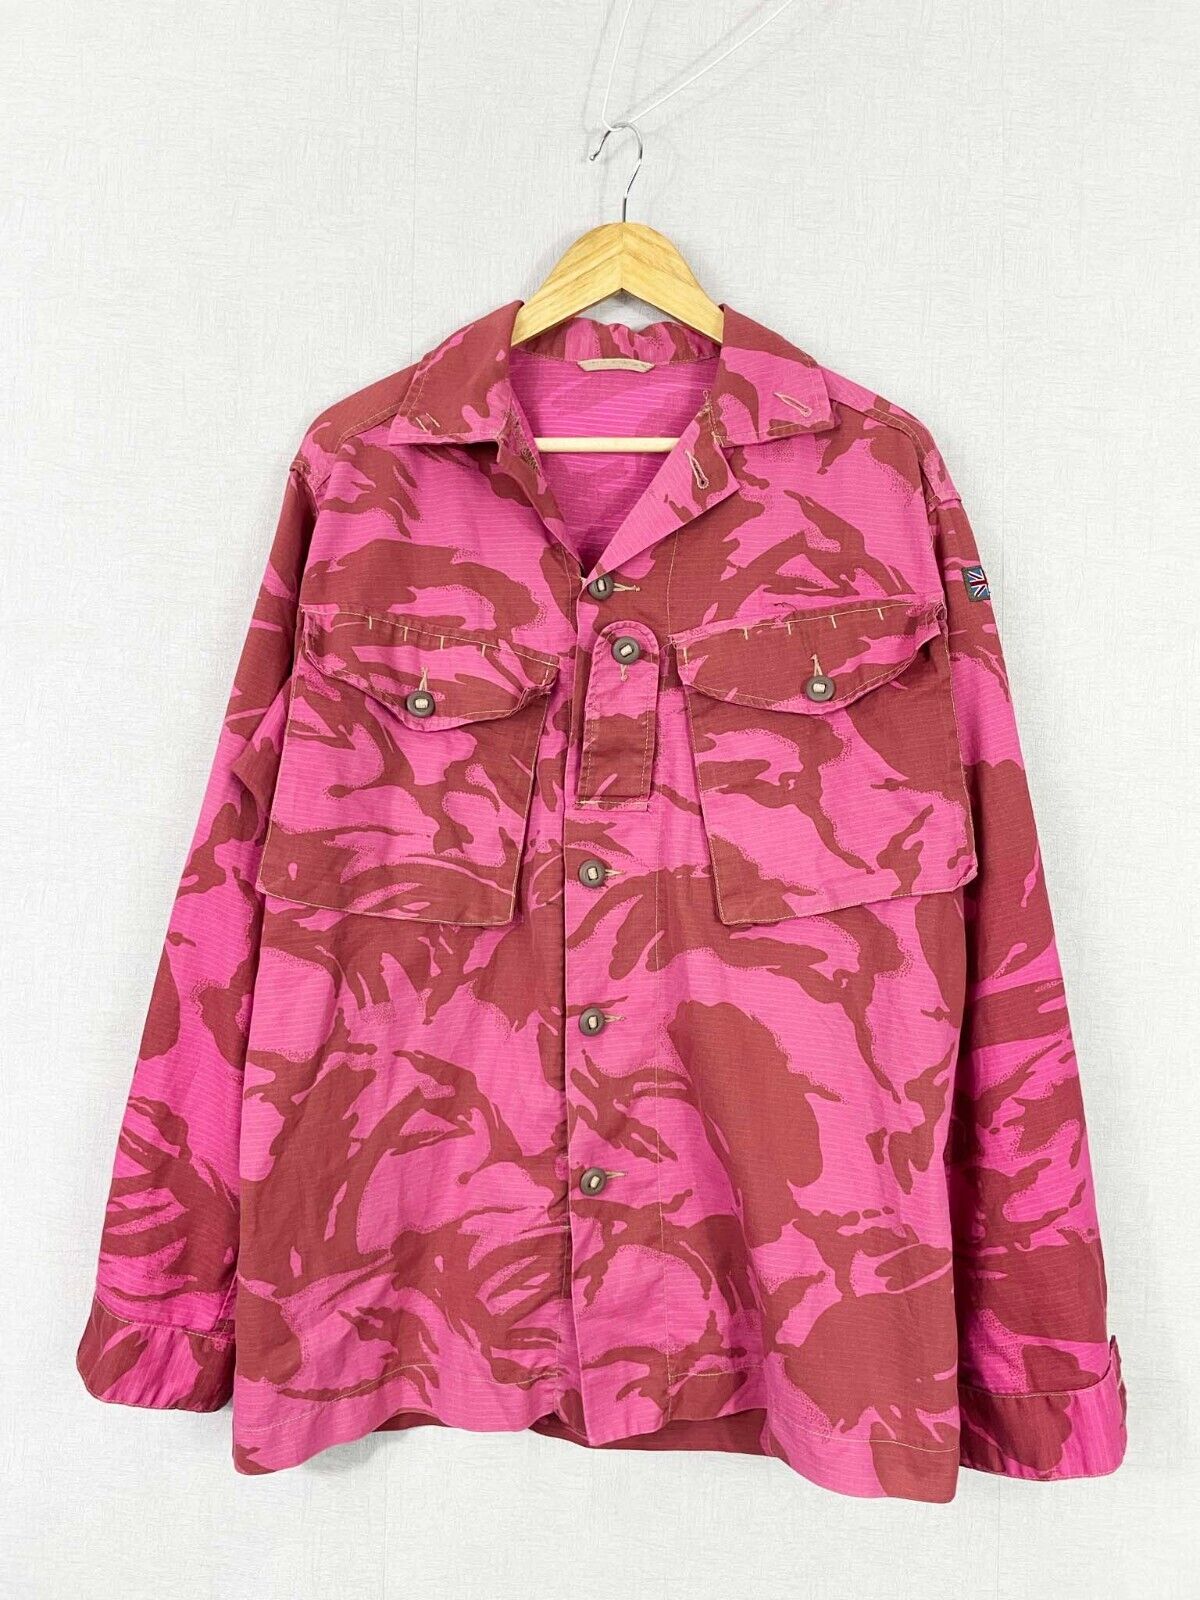 Vintage Army Shirt Pink